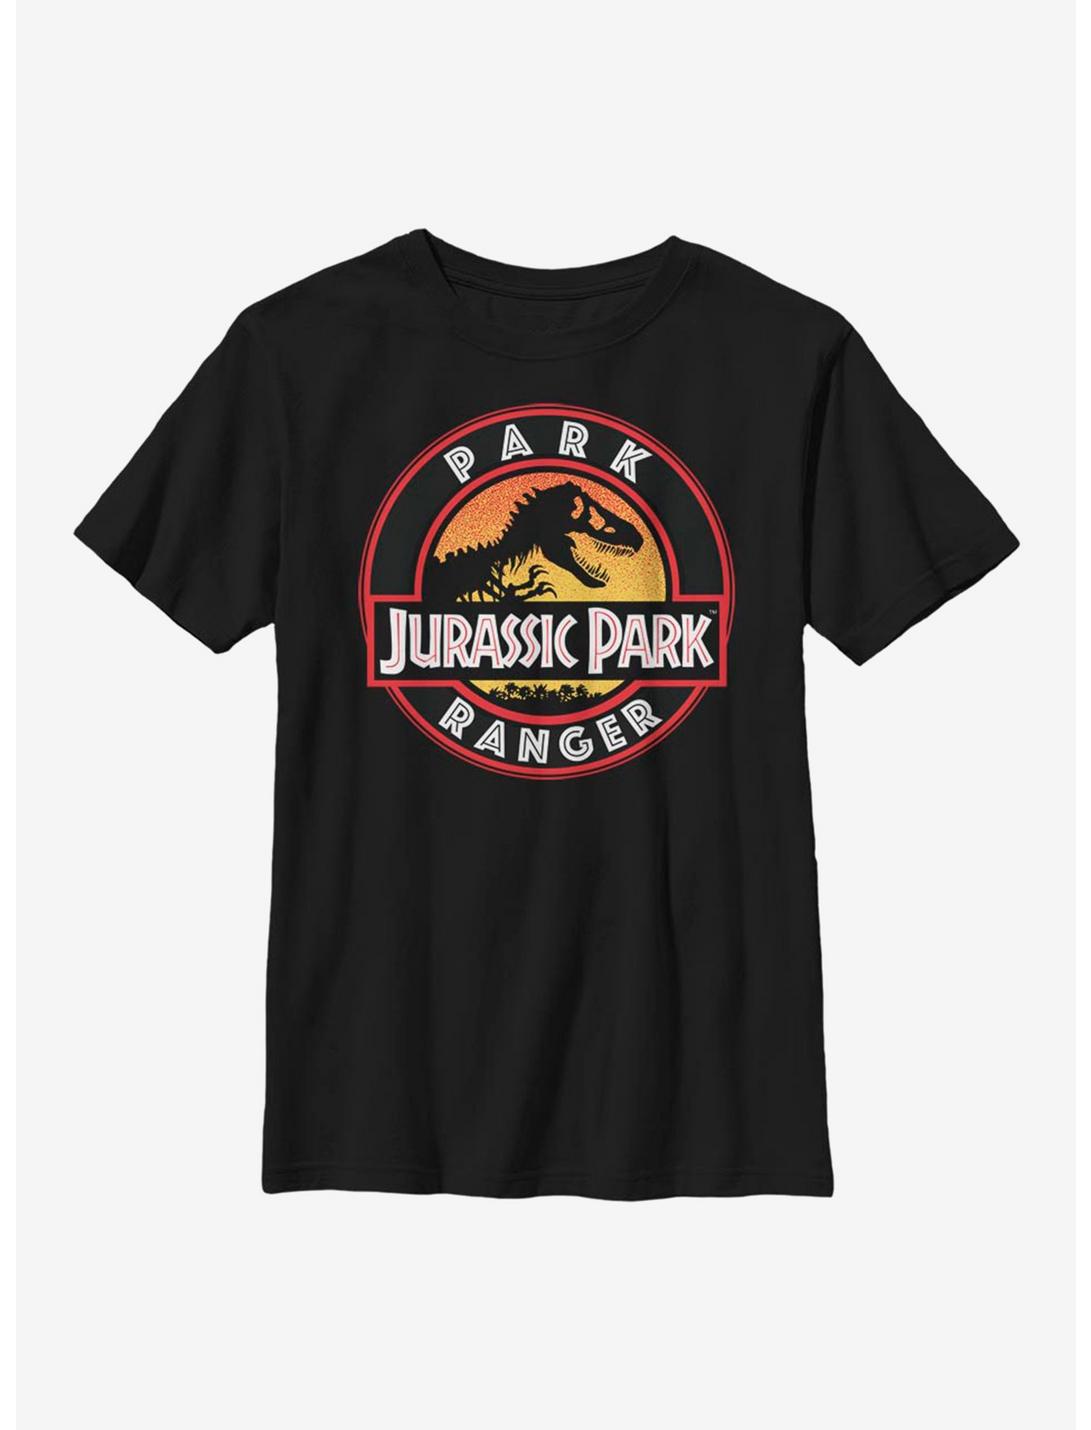 Jurassic Park Ranger Youth T-Shirt, BLACK, hi-res